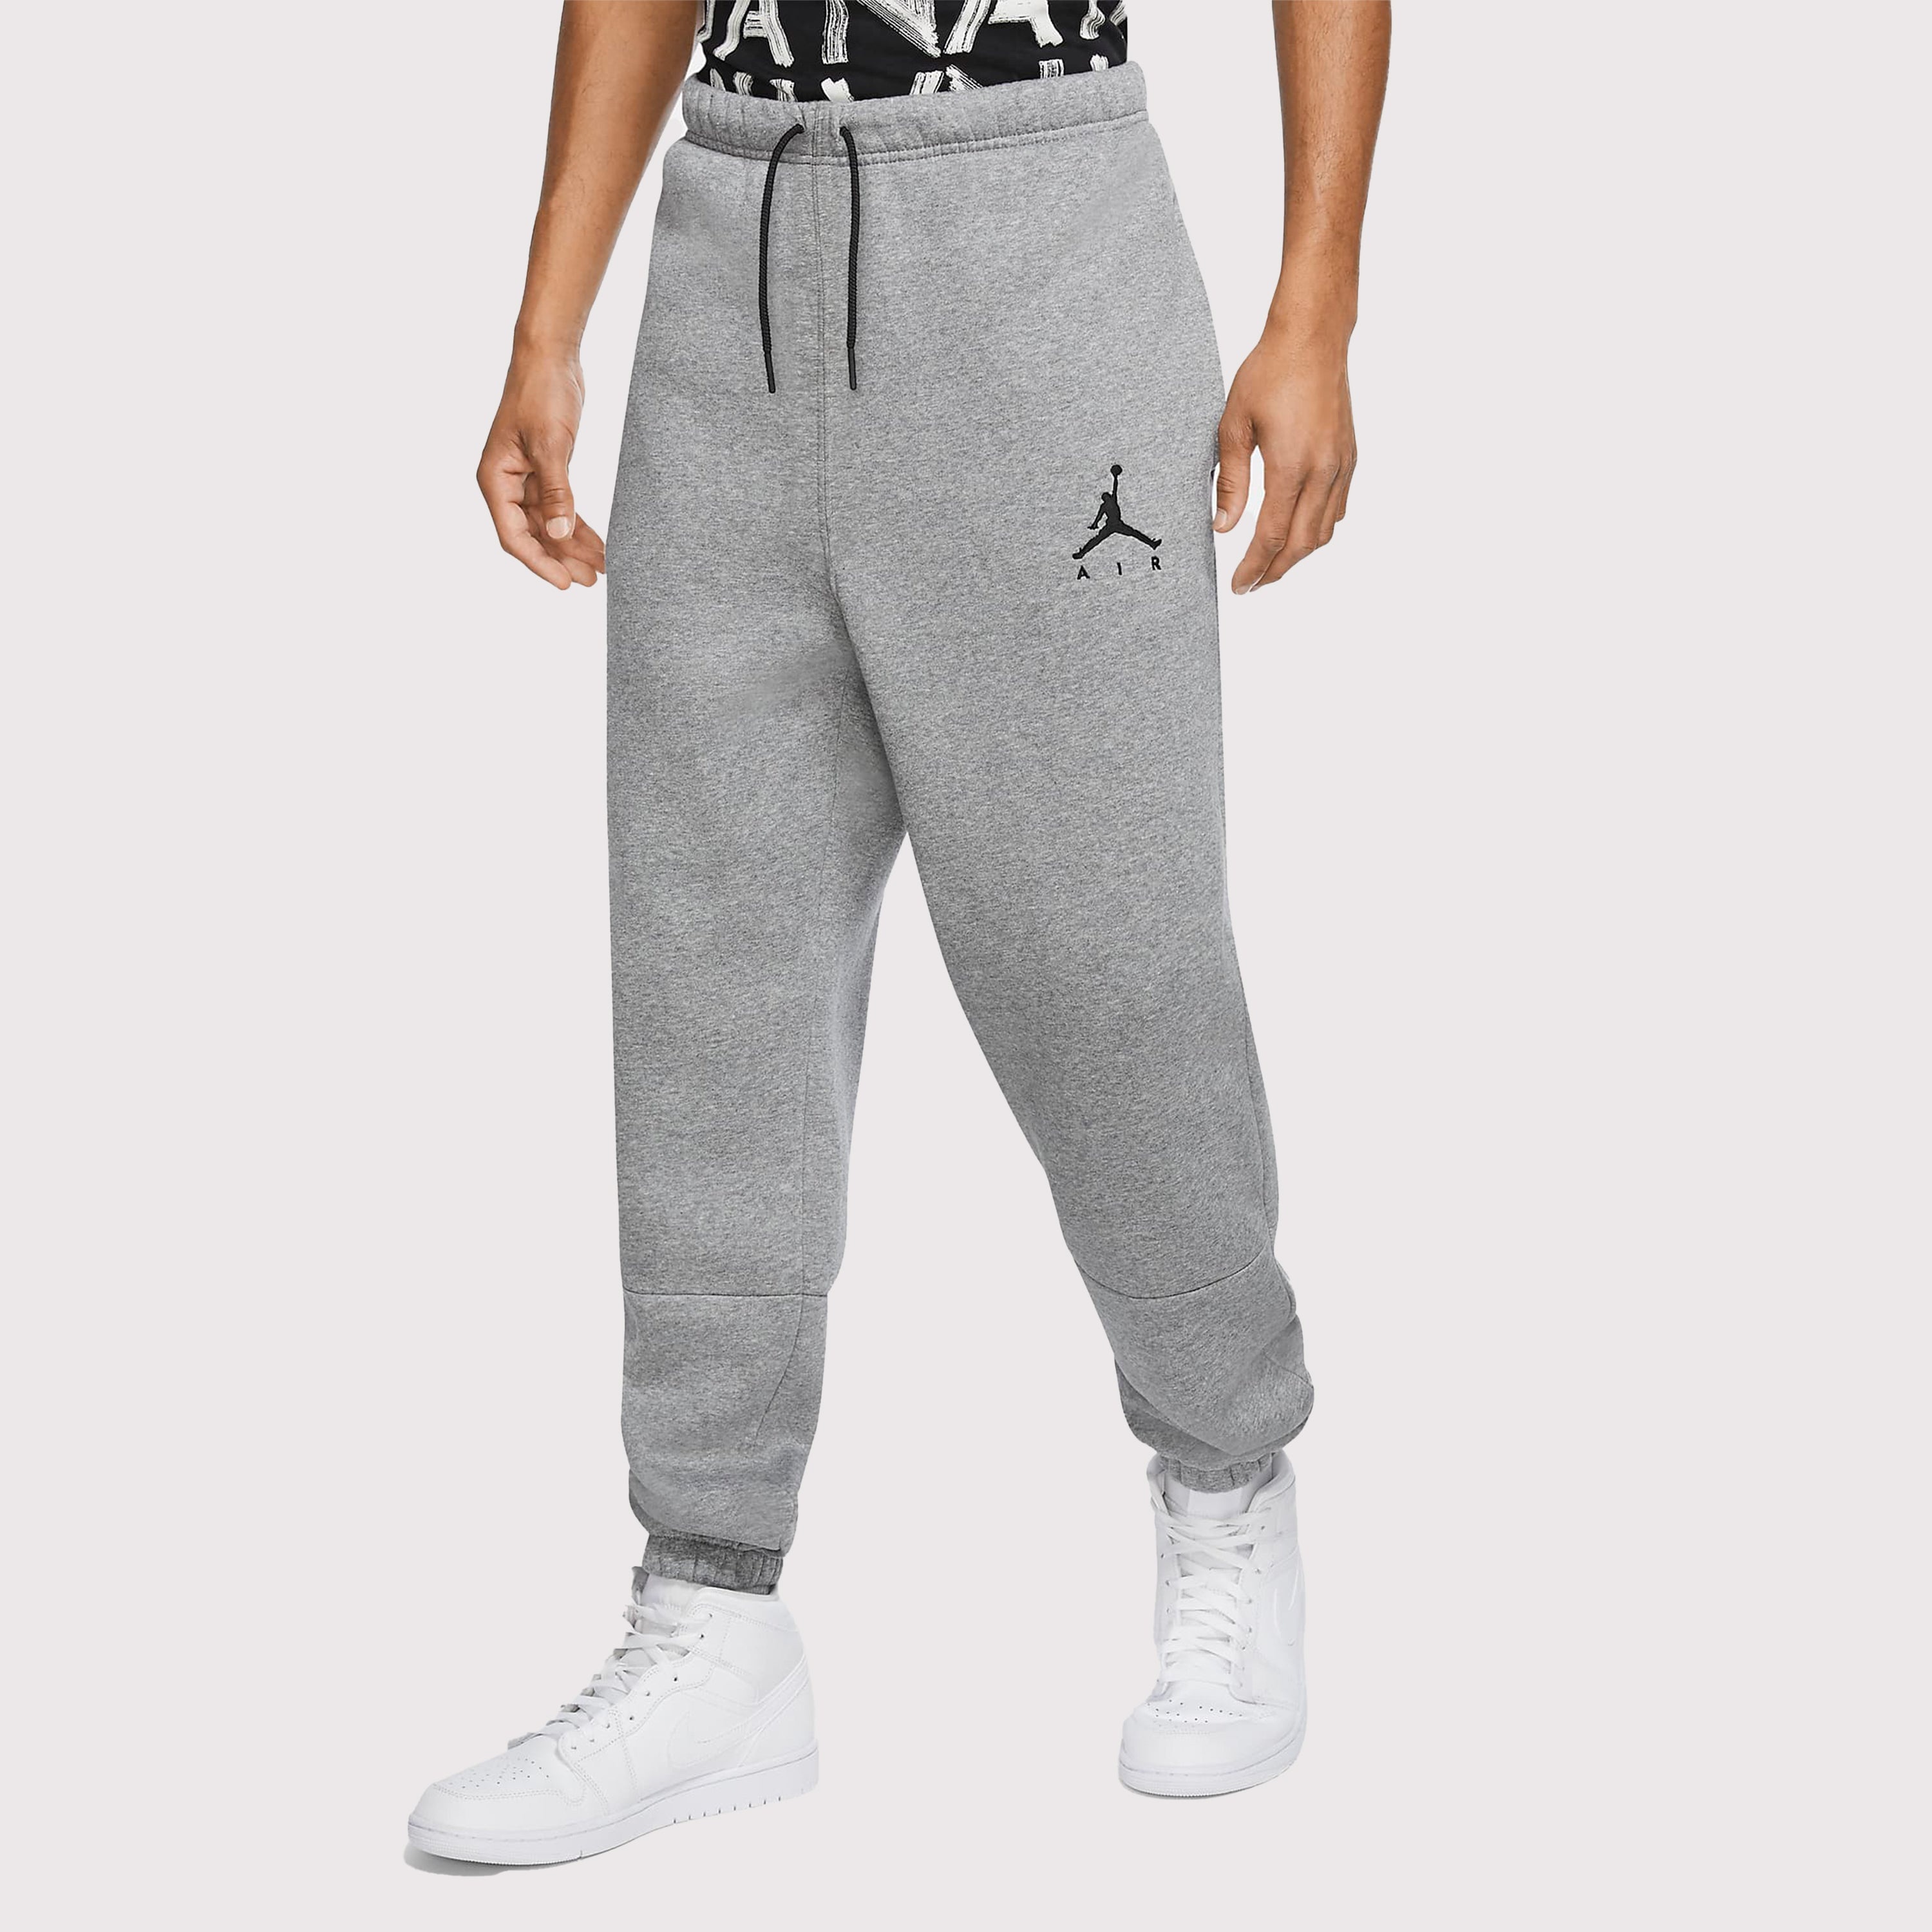 Air Jordan Casual Fleece Pants Men Grey CK6694-091 - 4